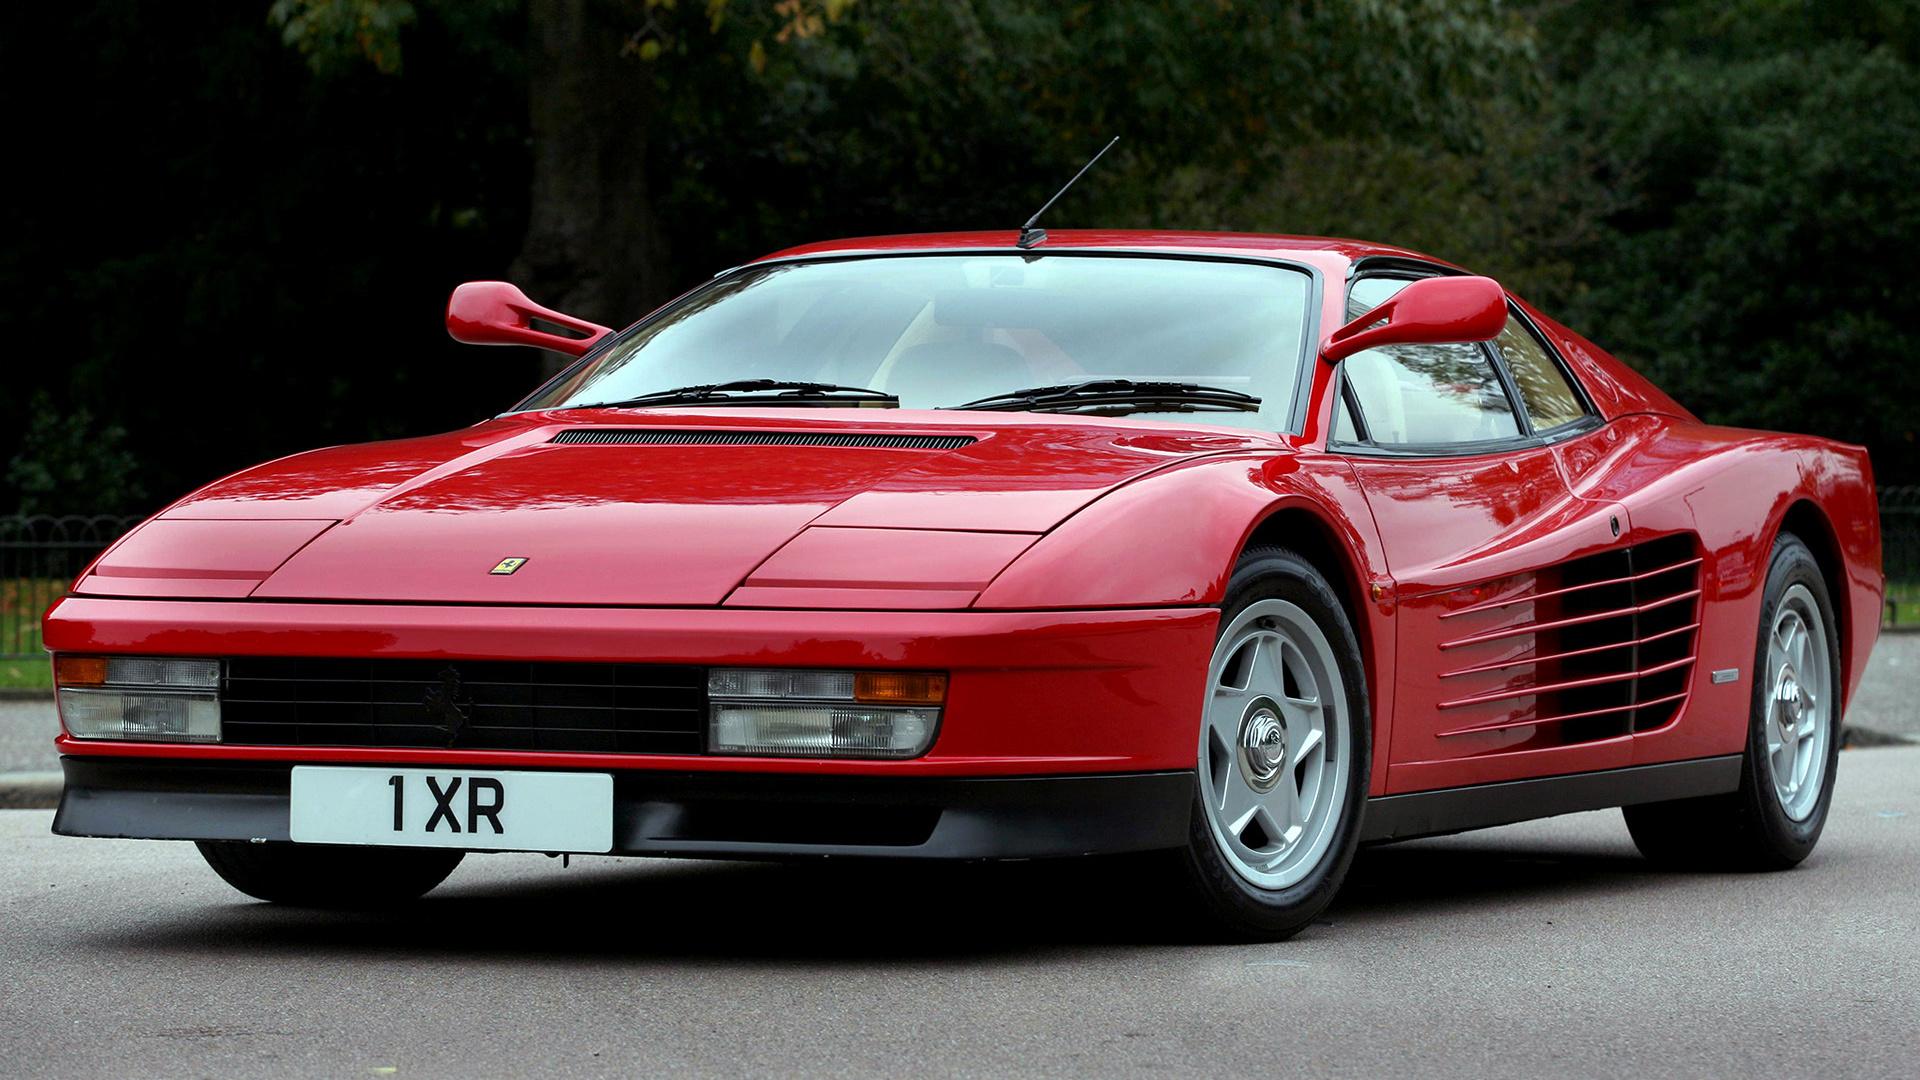 Ferrari Testarossa (UK) and HD Image